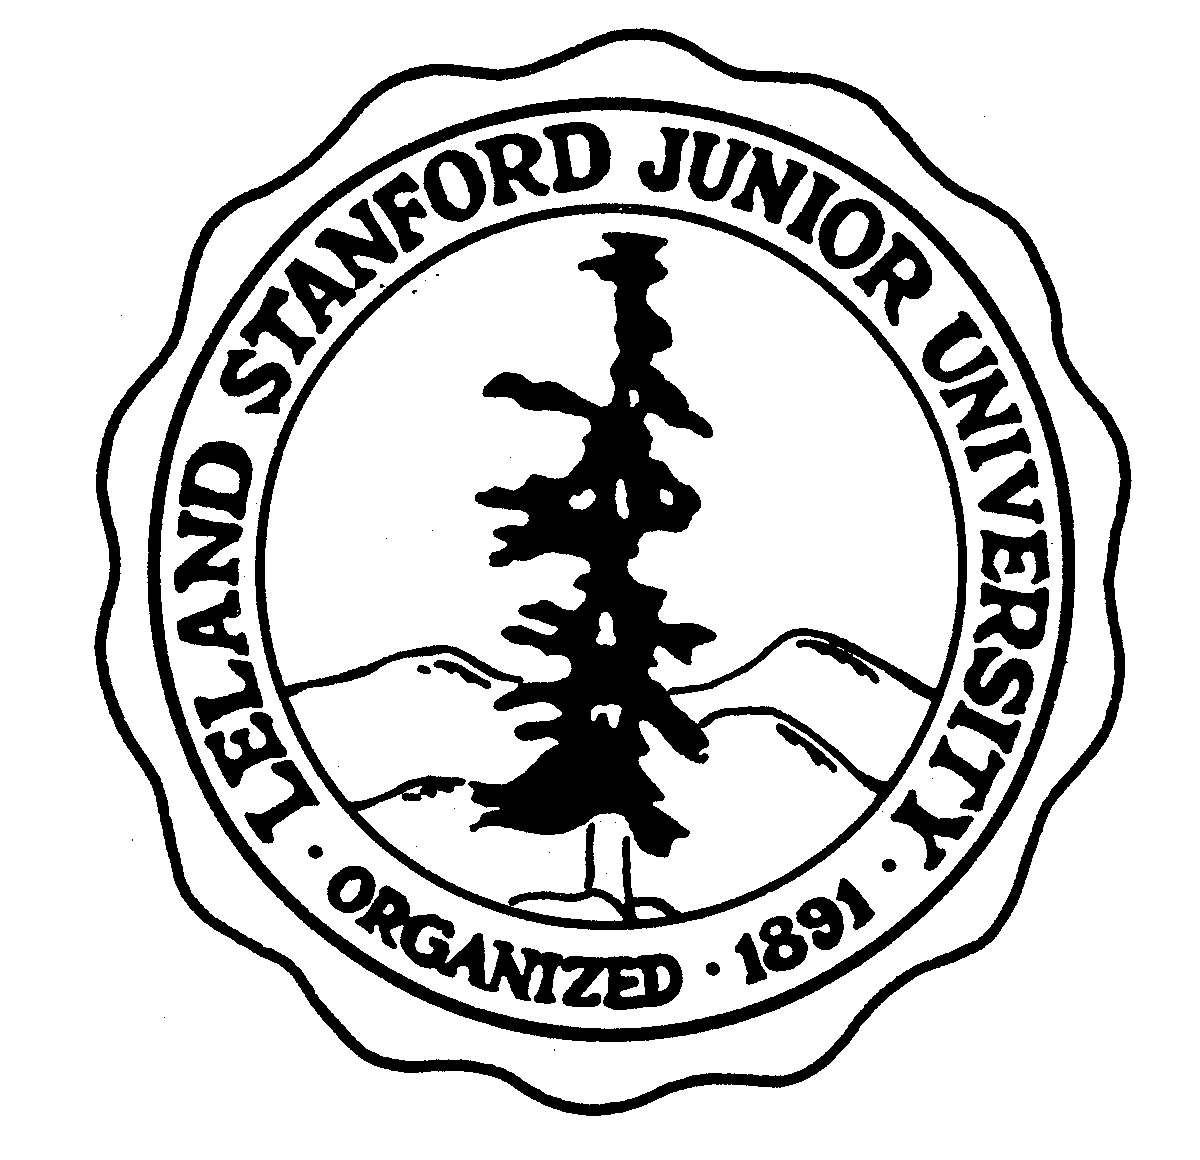  LELAND STANFORD JUNIOR UNIVERSITY-ORGANIZED 1891